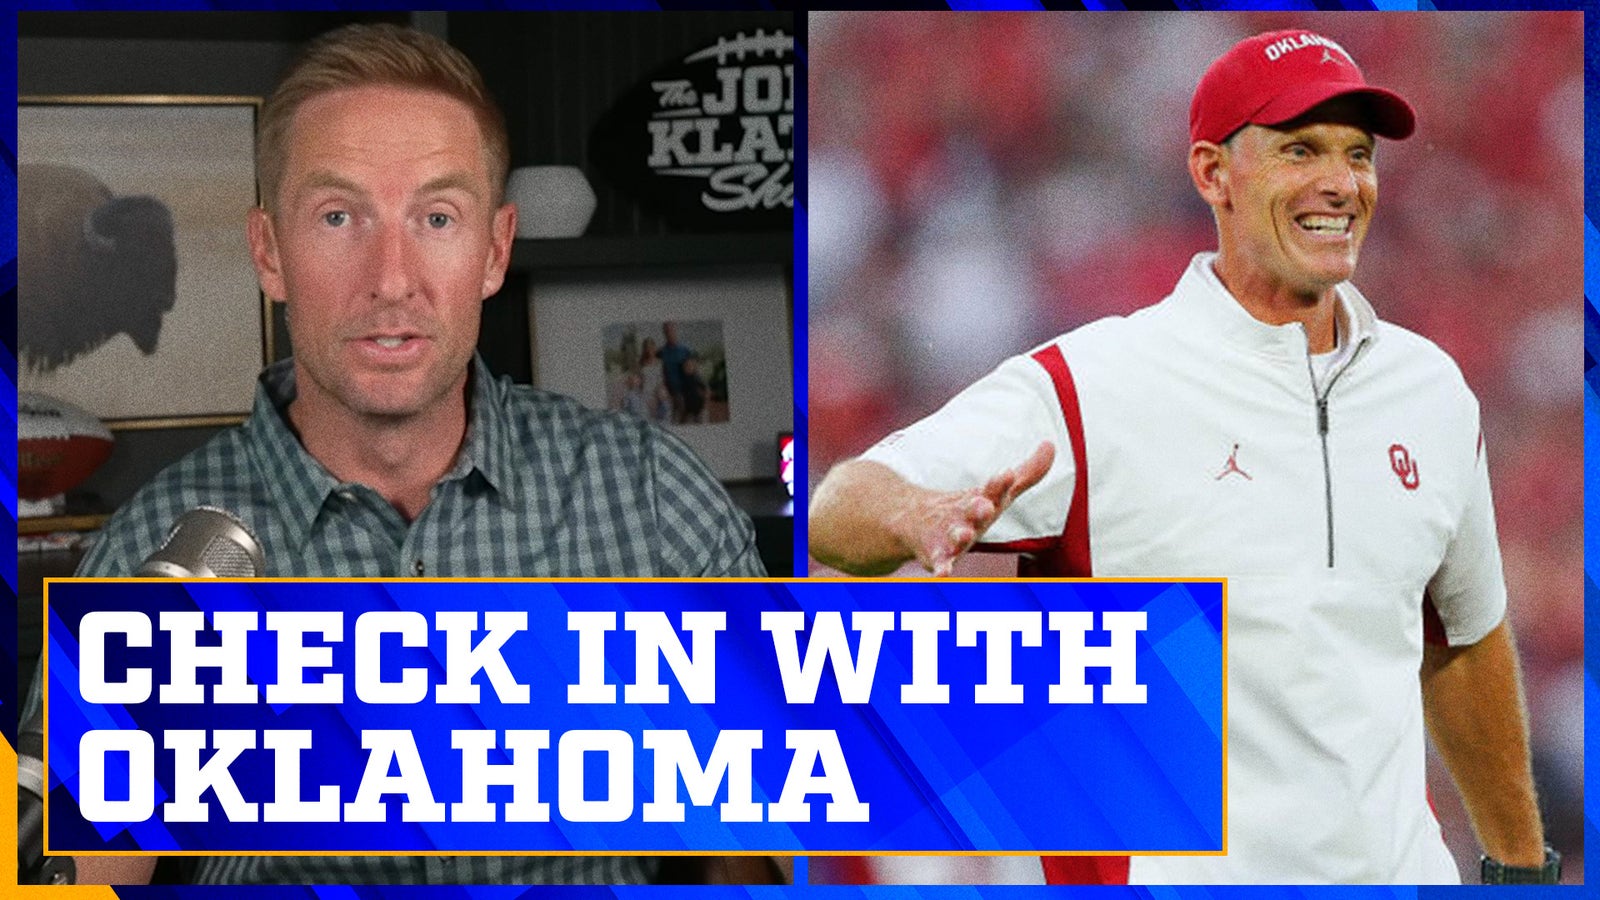 Can Oklahoma end its season strong?  |  Joel Klatt show